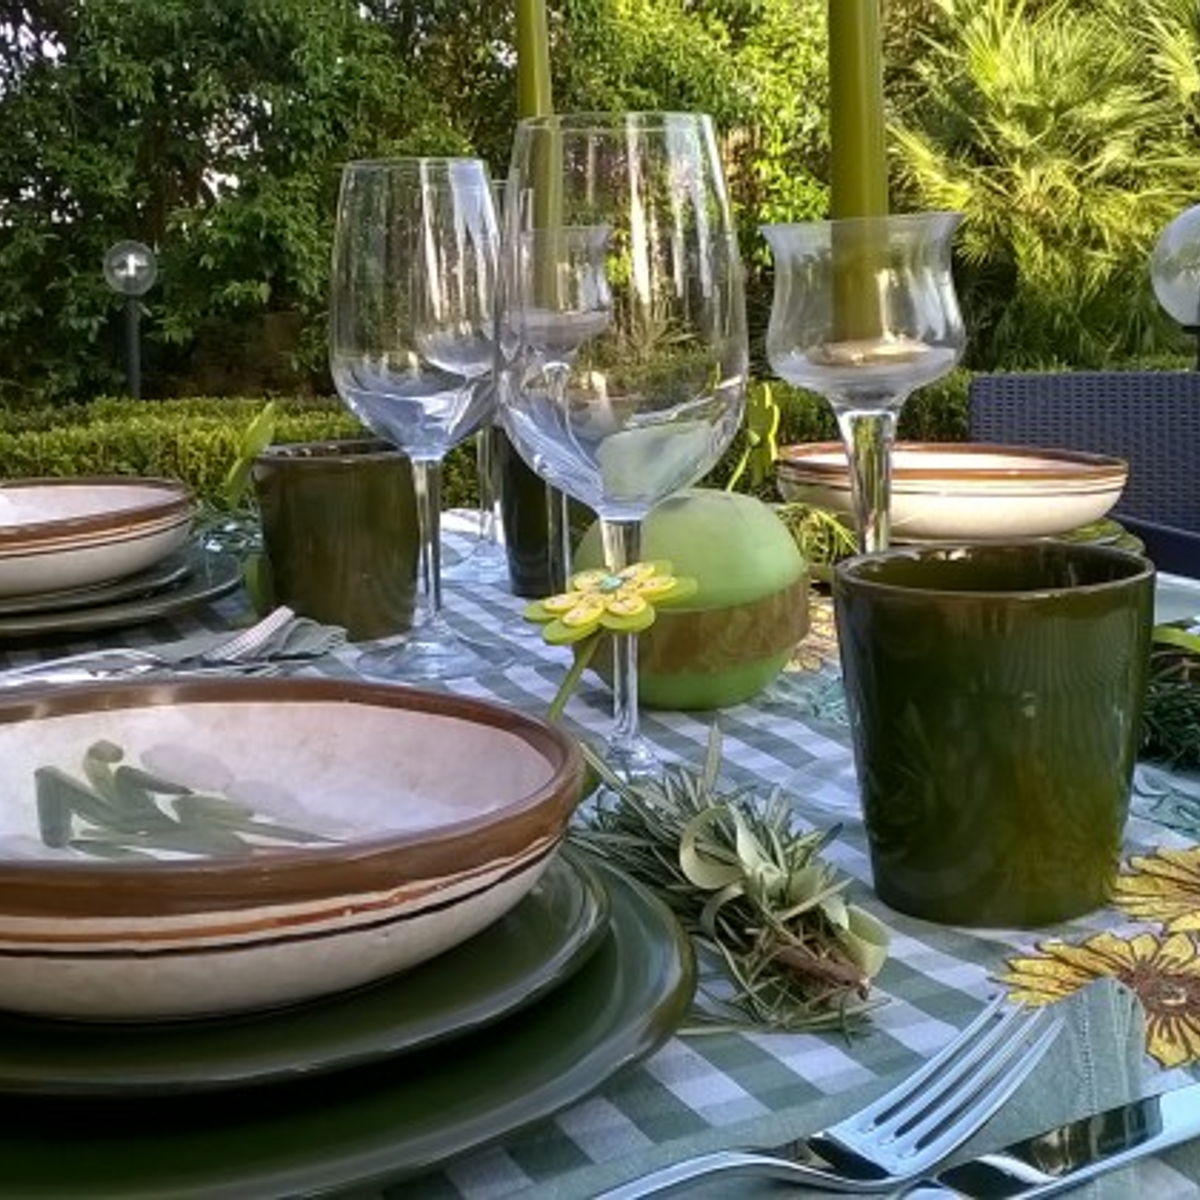 Typical Sicilian dinner in a Siracuse garden